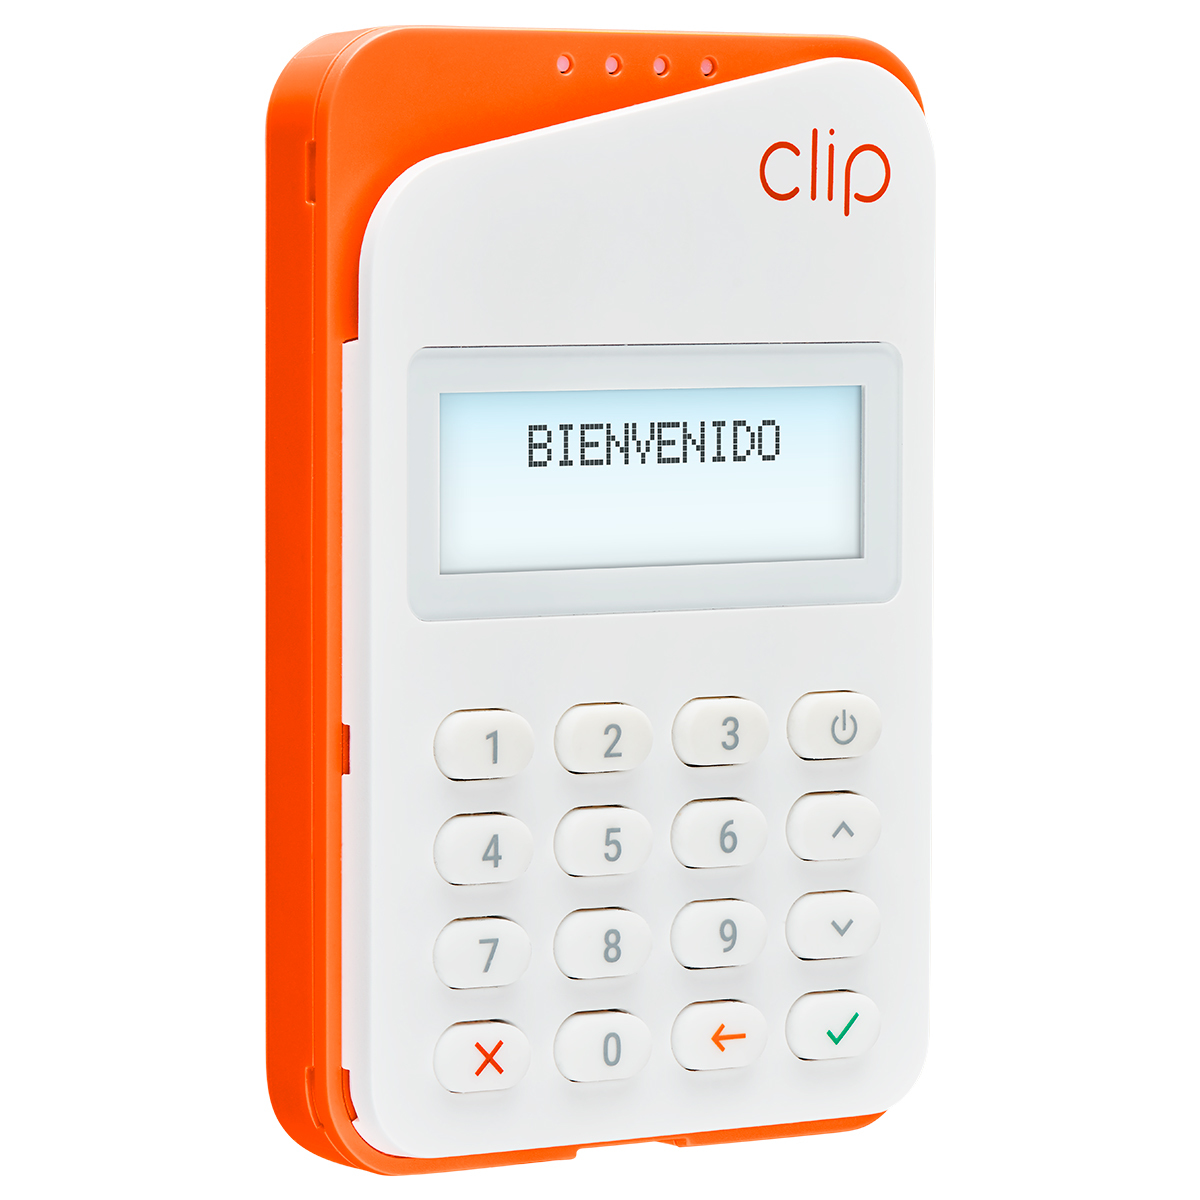 Registrarse Caprichoso Arco iris Lector de Tarjetas Bancarias Clip Plus 2.0 Bluetooth | RadioShack México